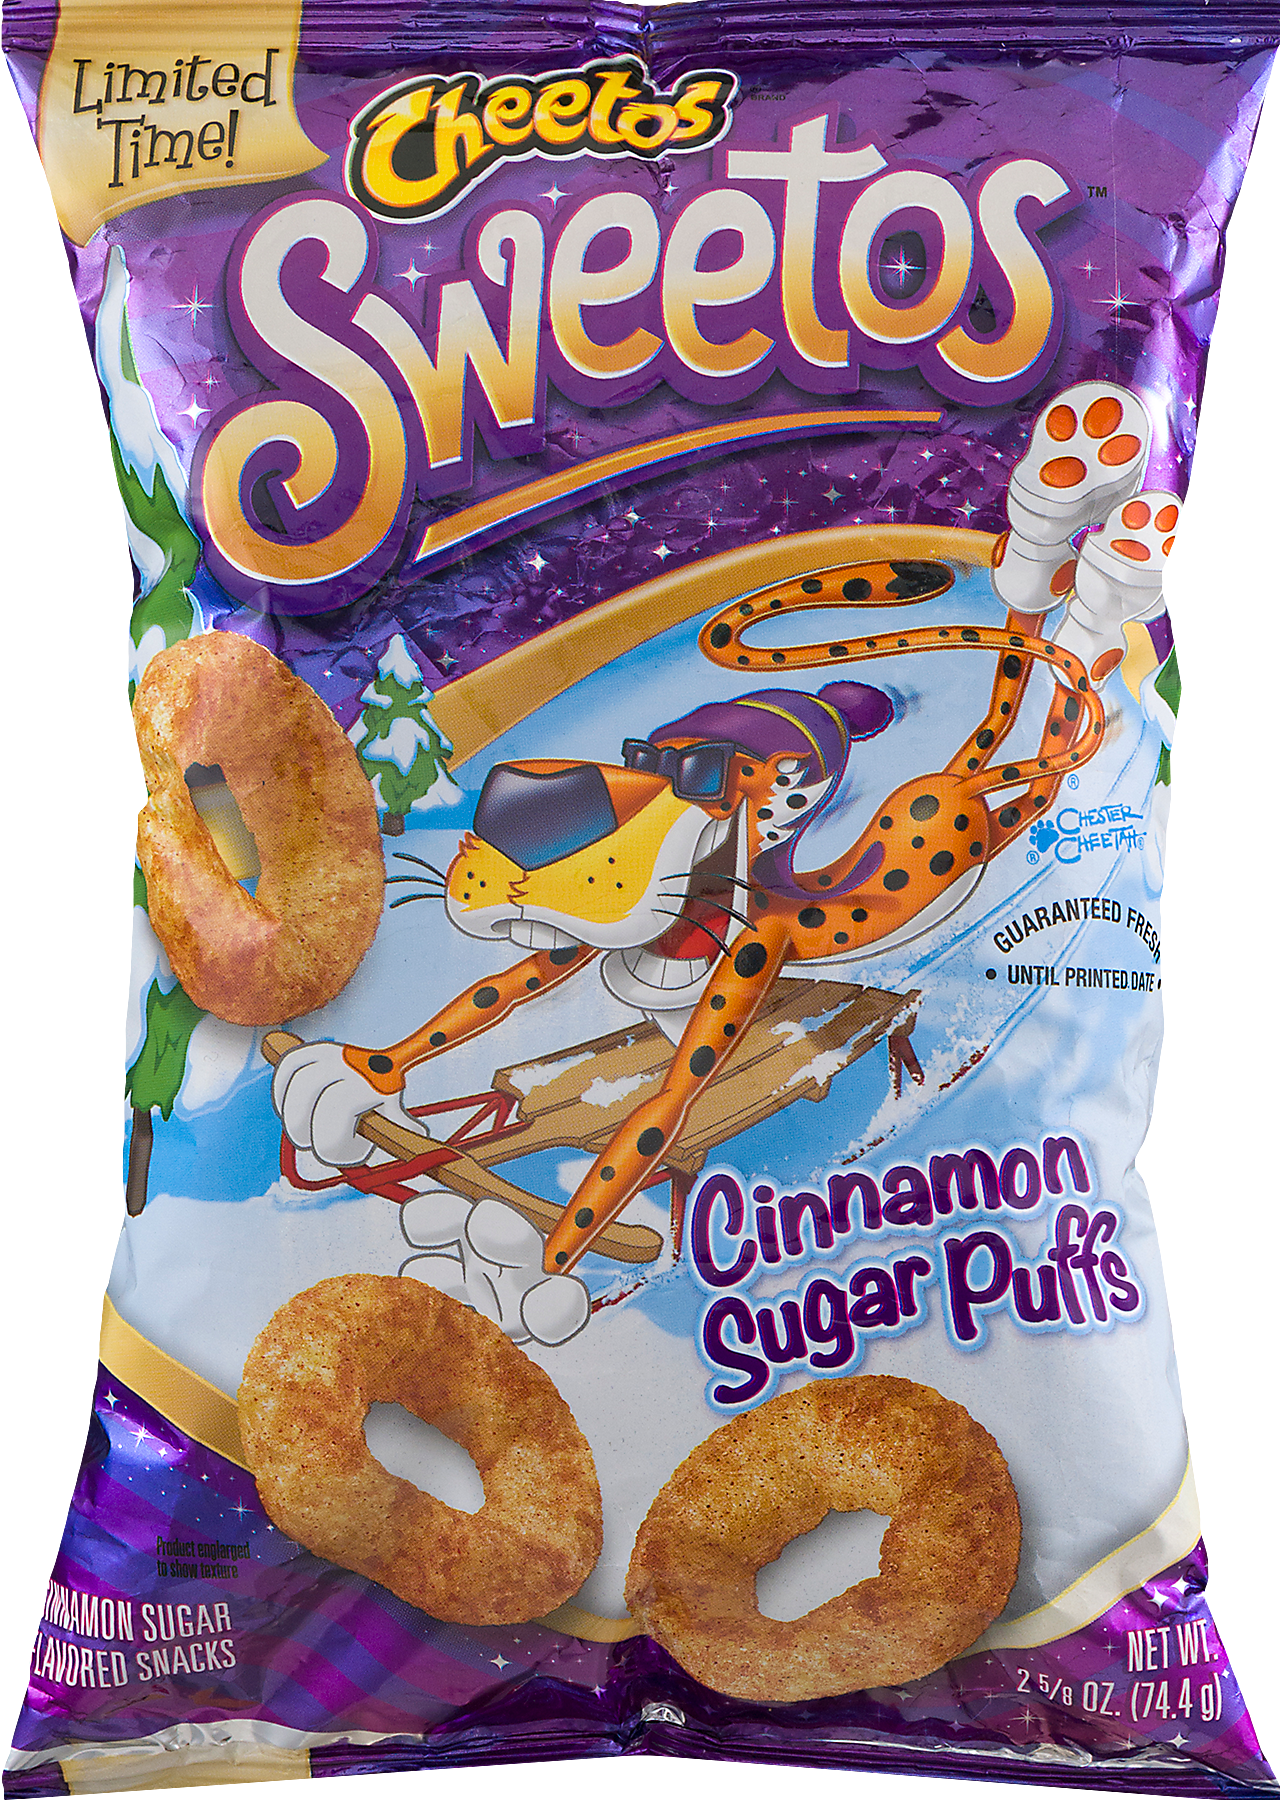 Cheetos Sweetos Cinnamon Sugar Puffs Package PNG image